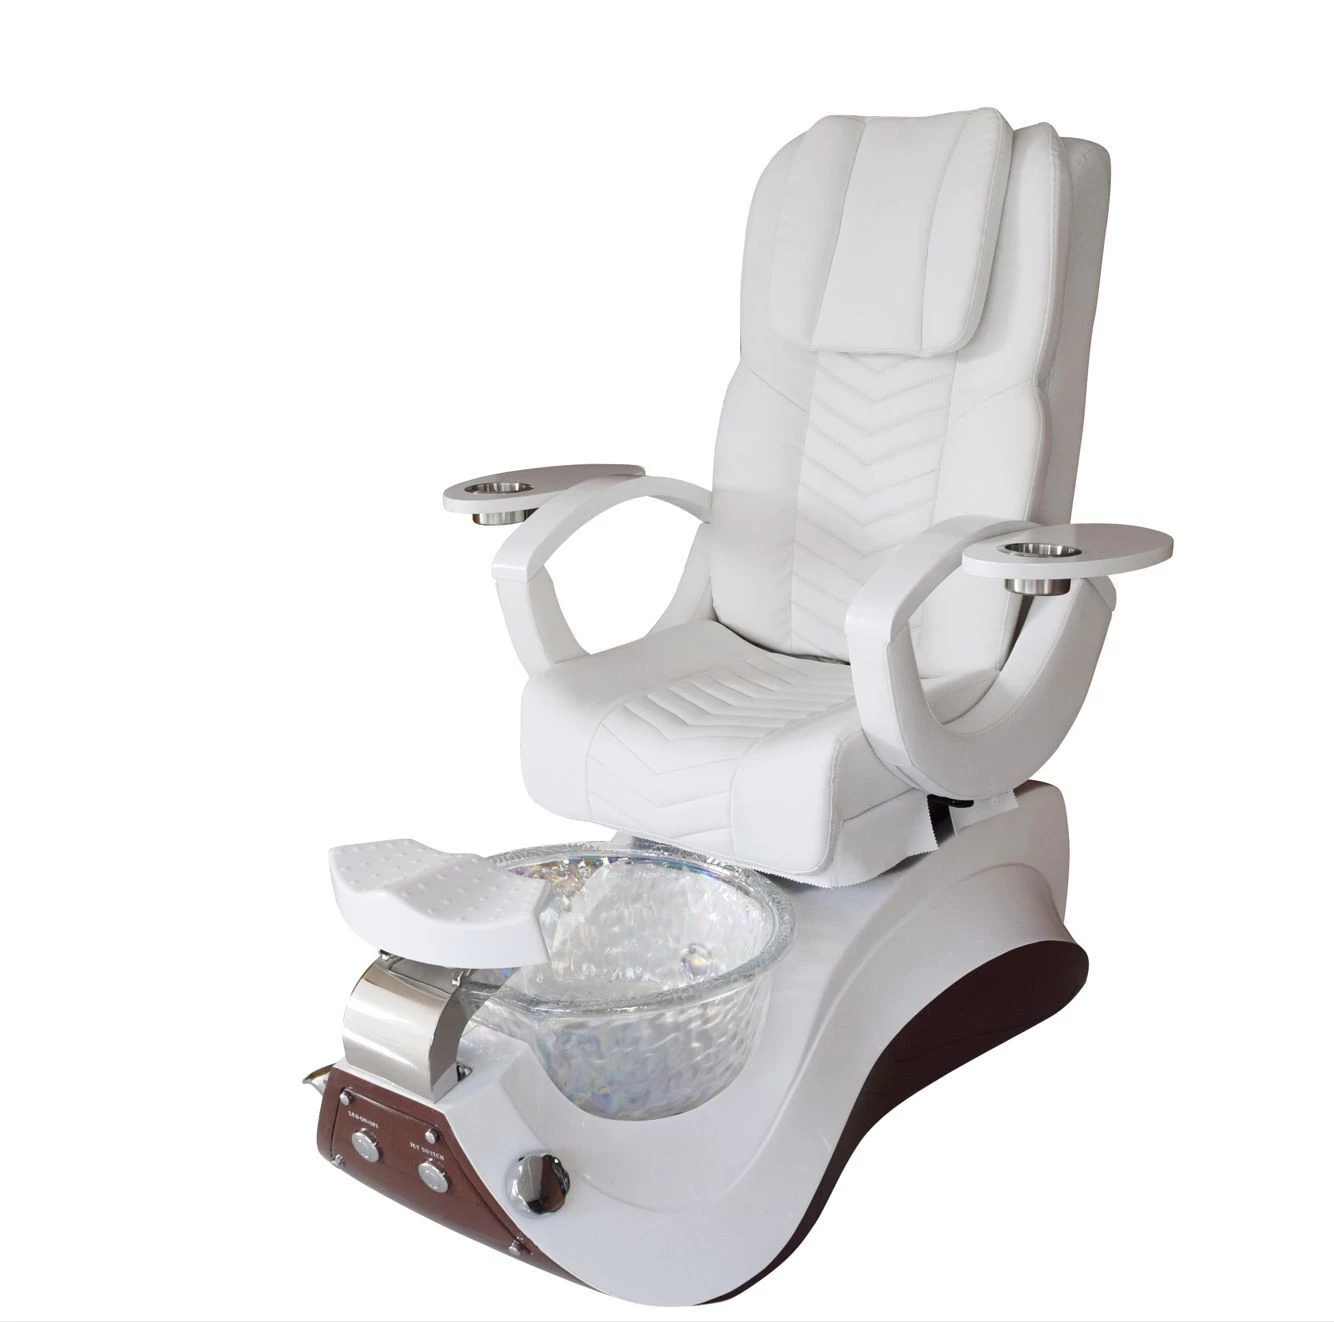 fiberglass spa pedicure chair doshower nail salon equipment of new beauty salon supplies 